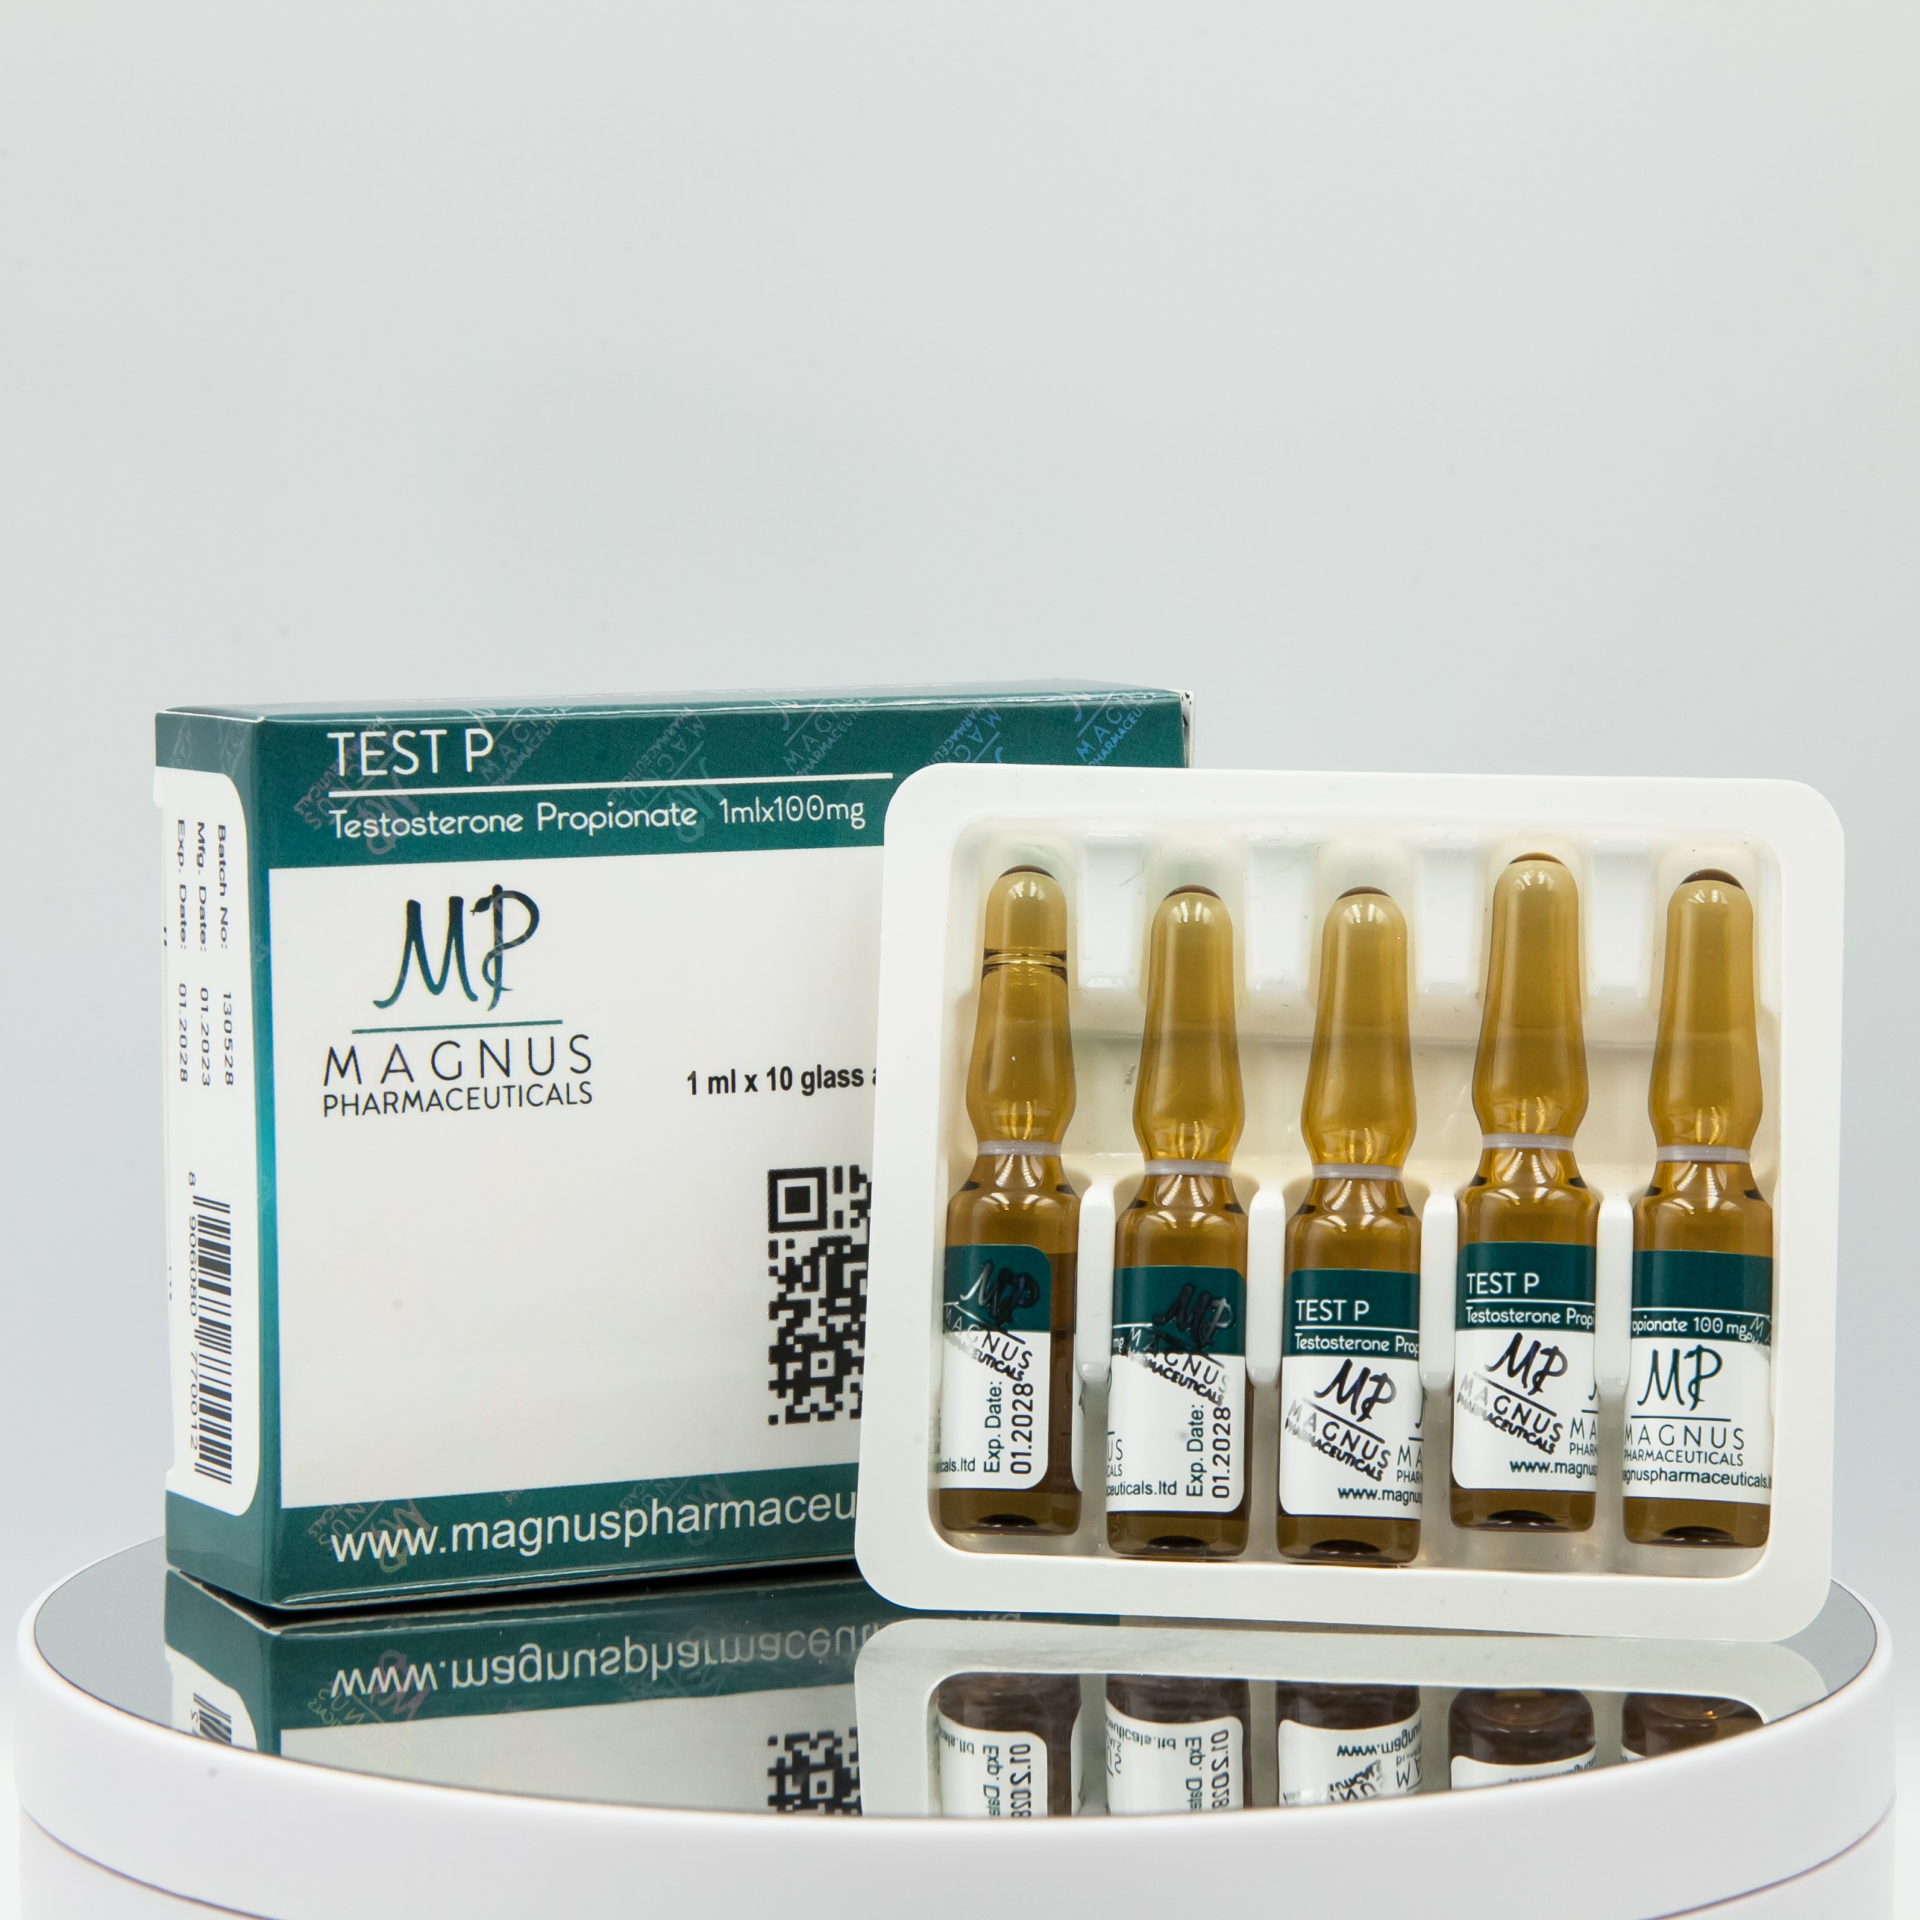 Test P (Testosterone Propionate) 100 mg Magnus Pharmaceuticals Iniezione di steroidi 3